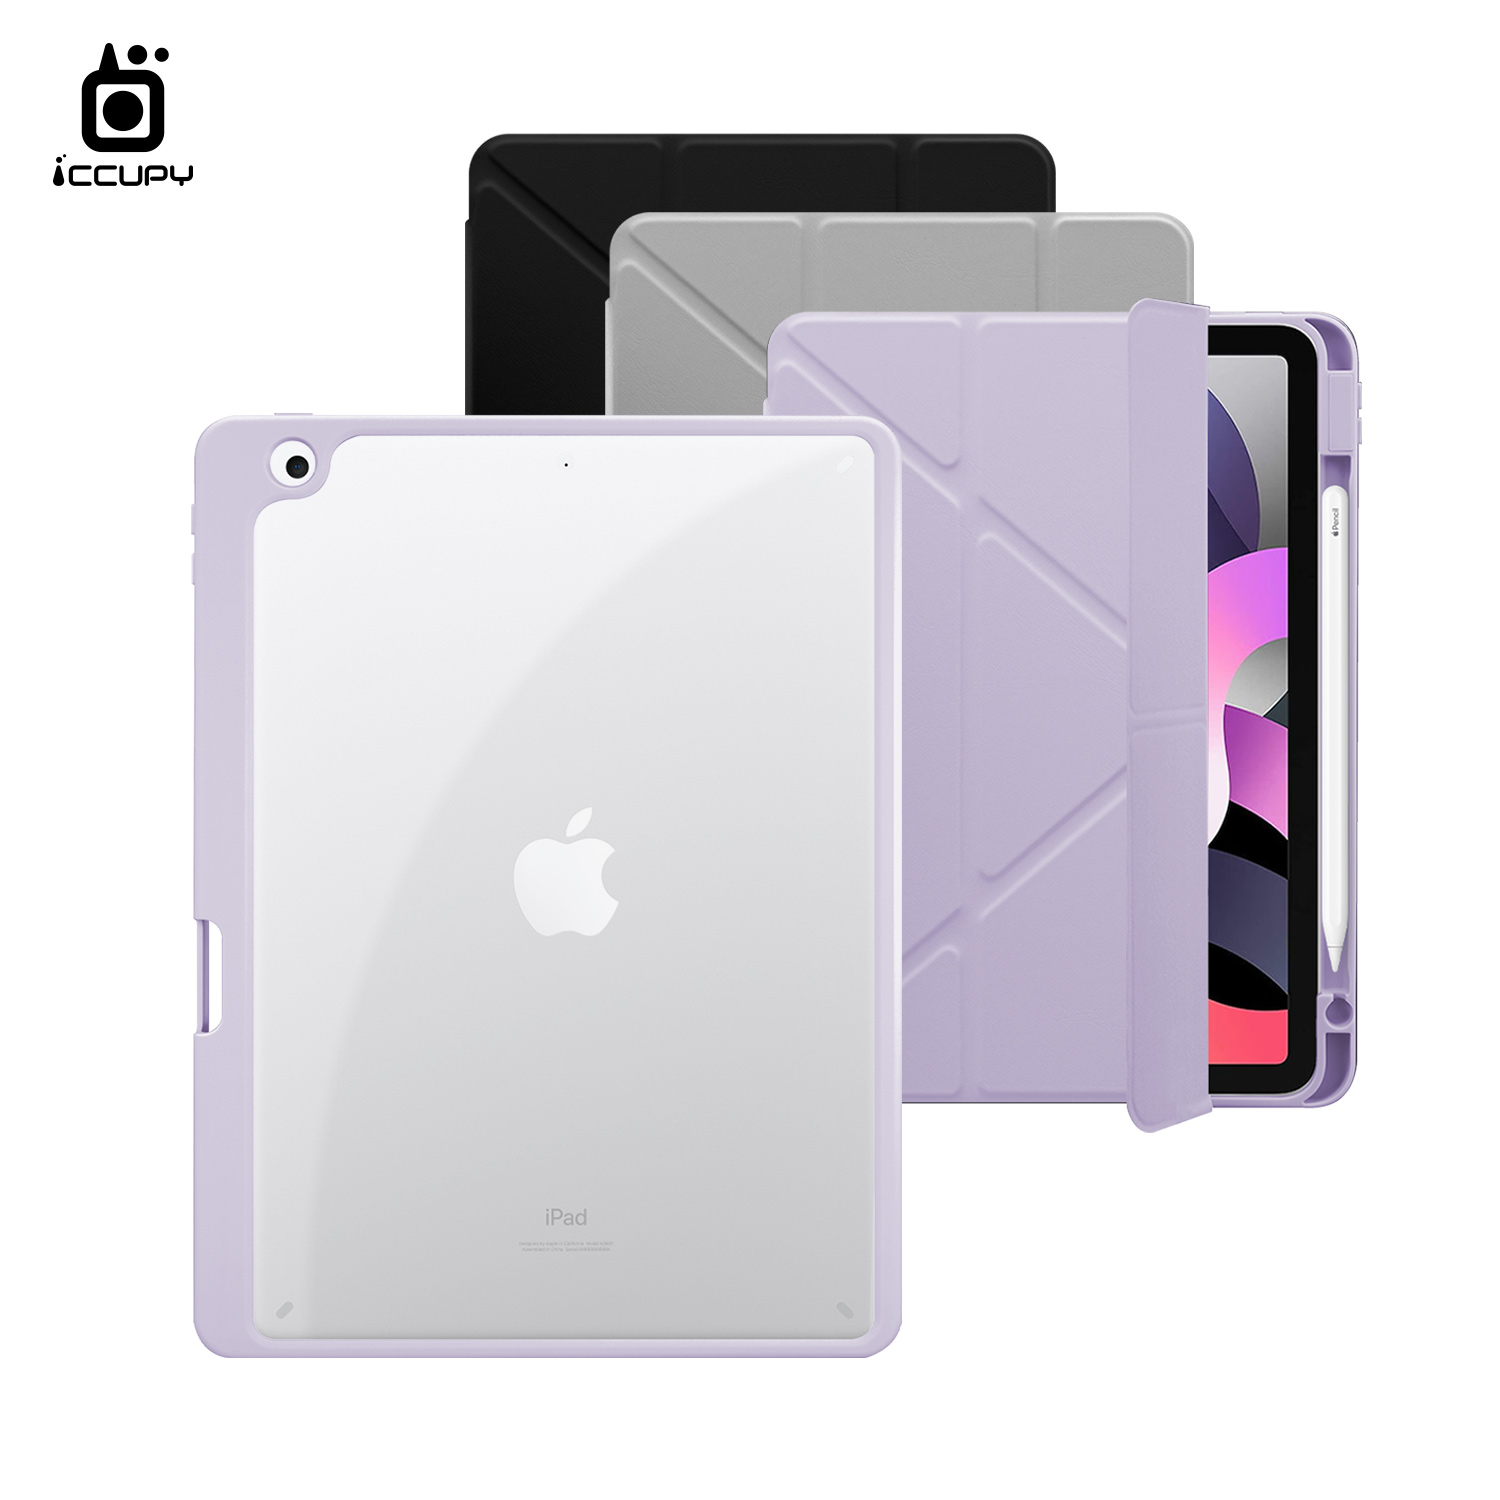 【iCCUPY黑占盾For iPad】黑占盾平板SN系列-卡扣式拆裝兩用(共三色) For iPad 第7代 10.2吋